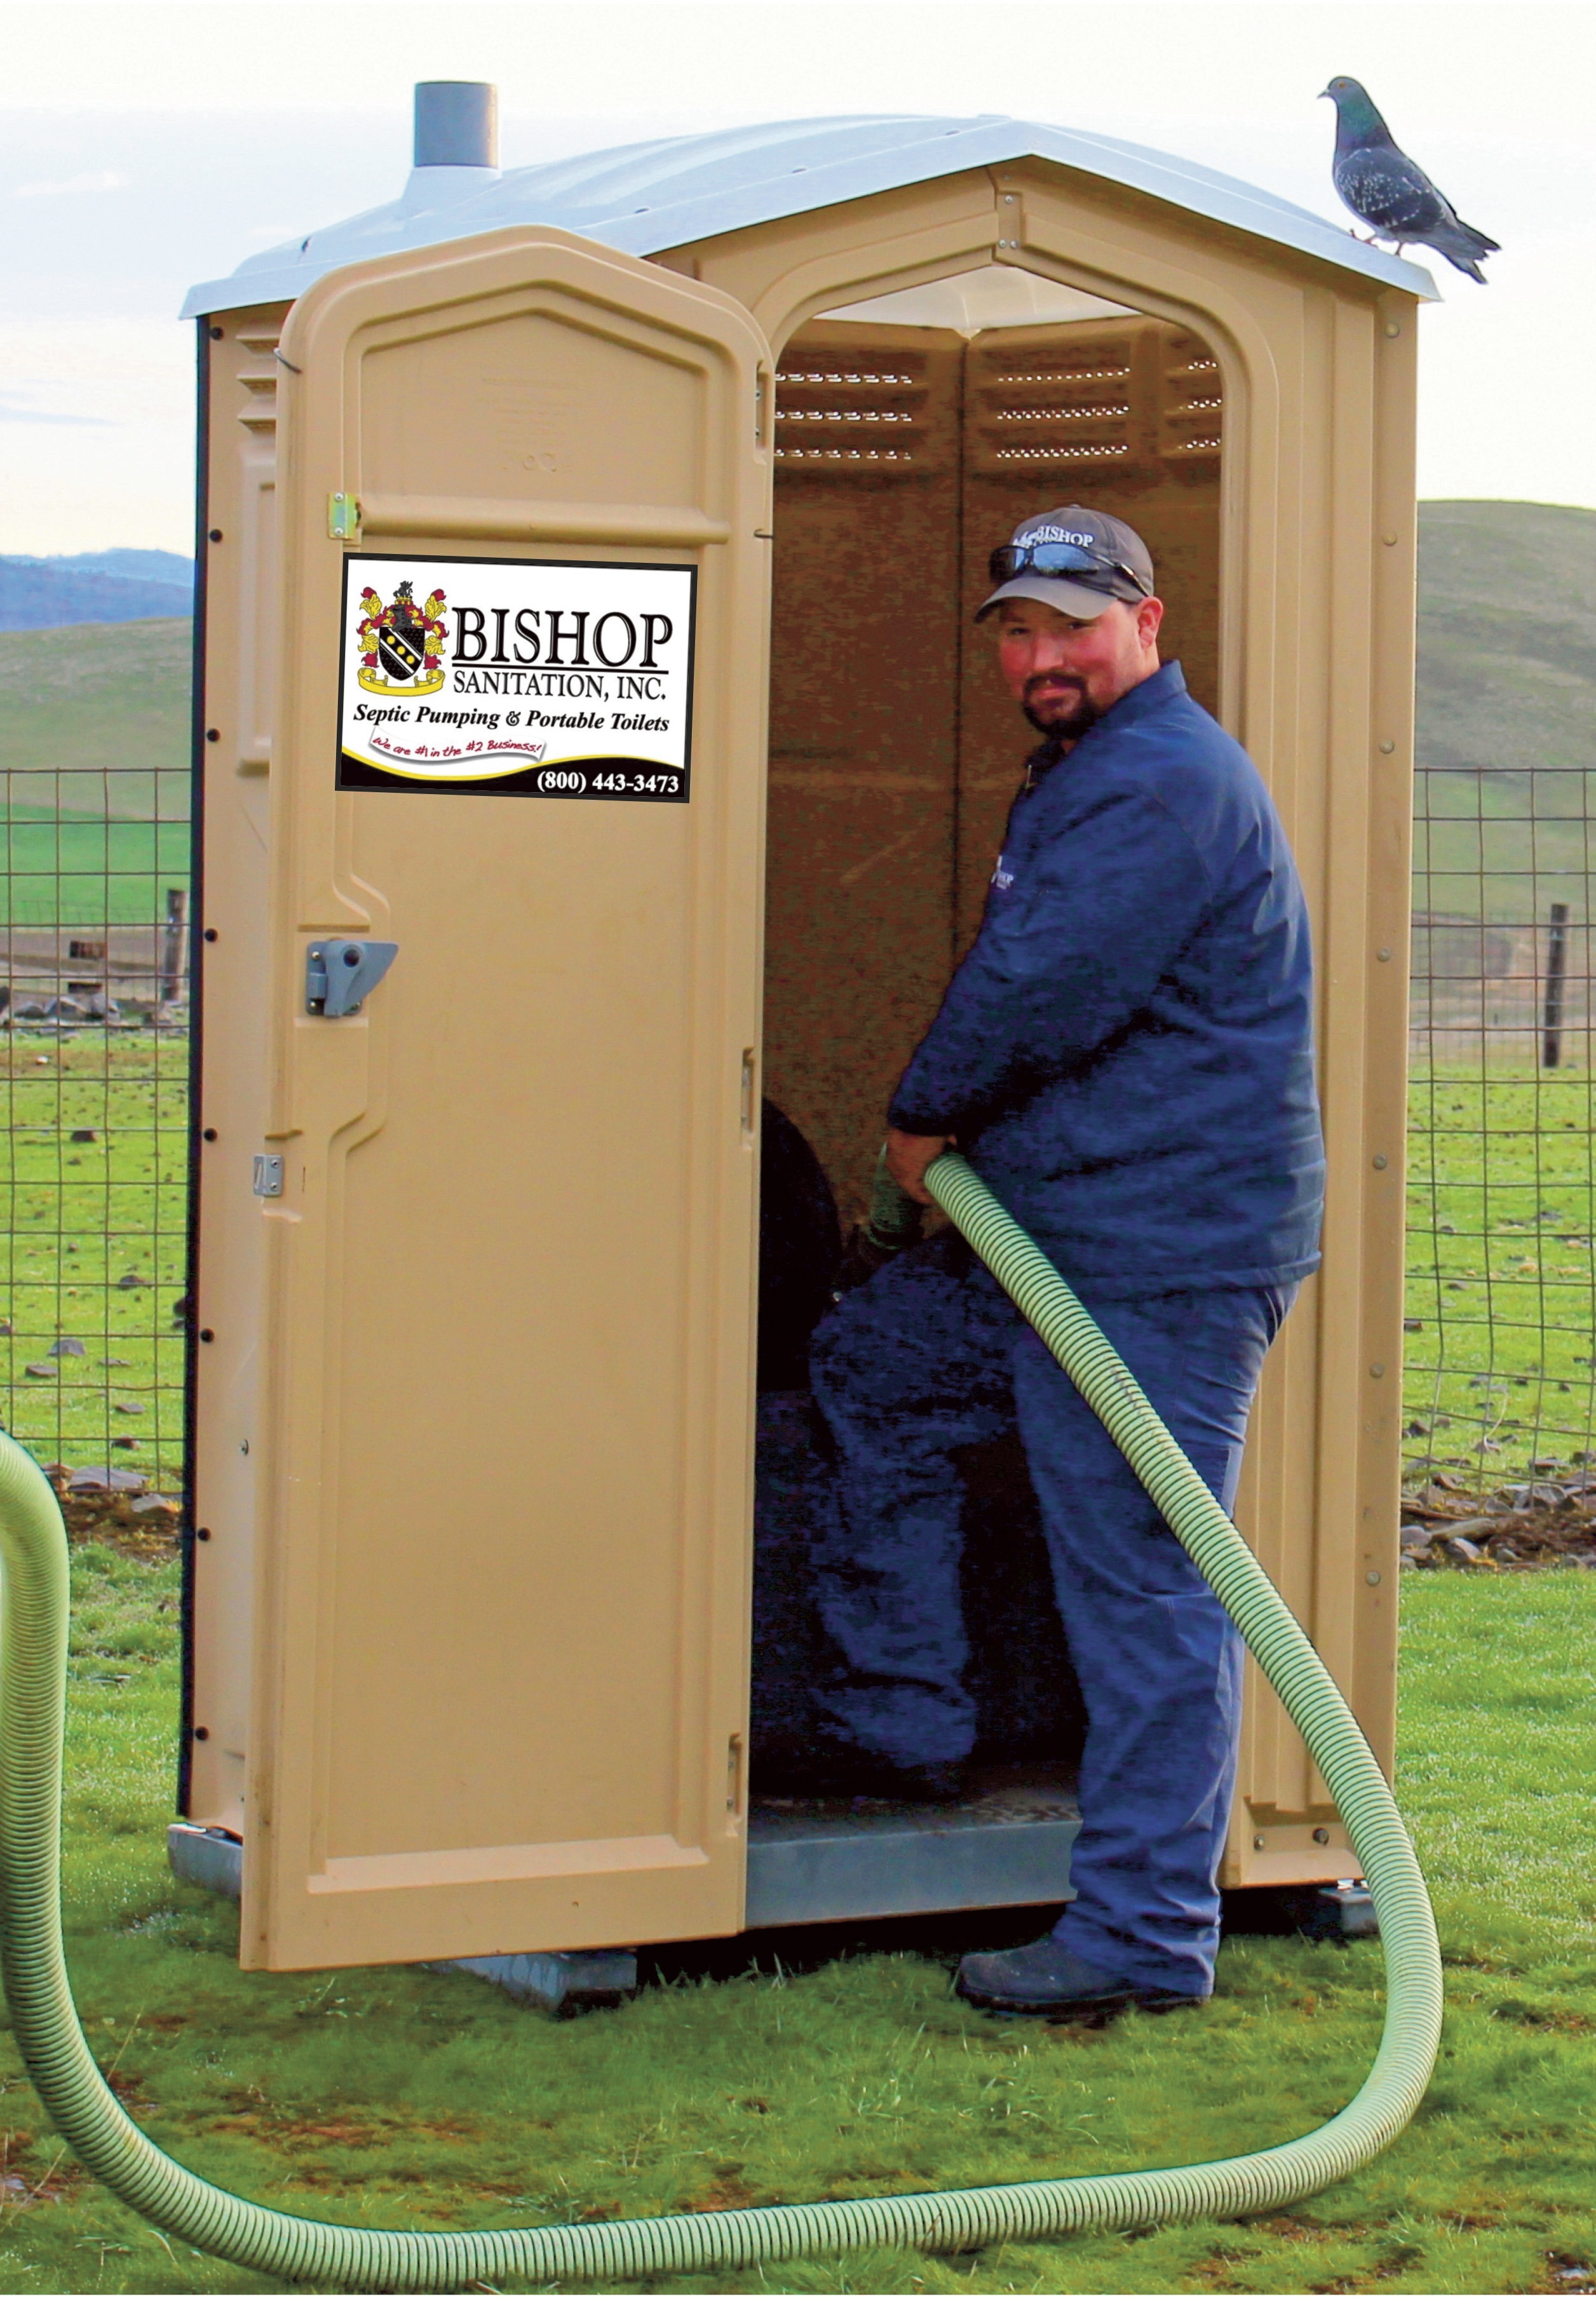 Bishop Sanitation - Portable Potty Services